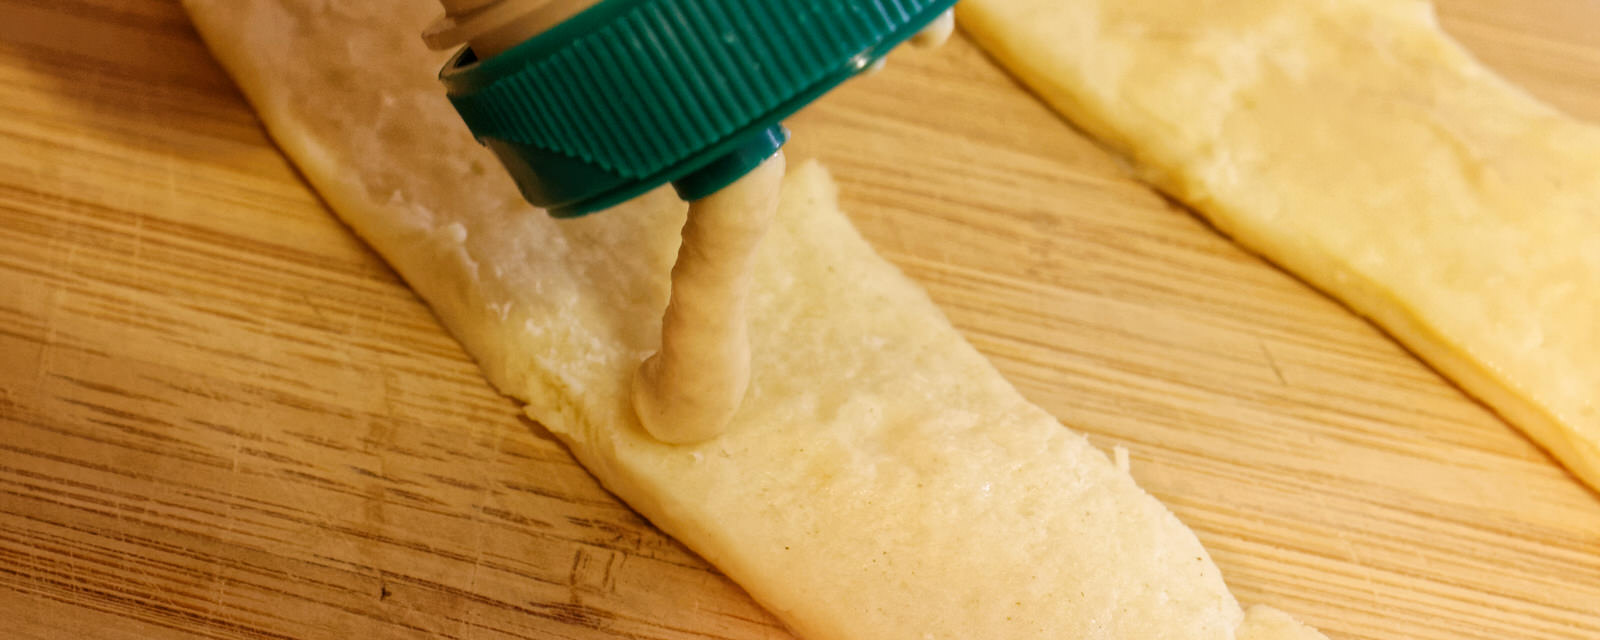 Spreading mustard on the dough